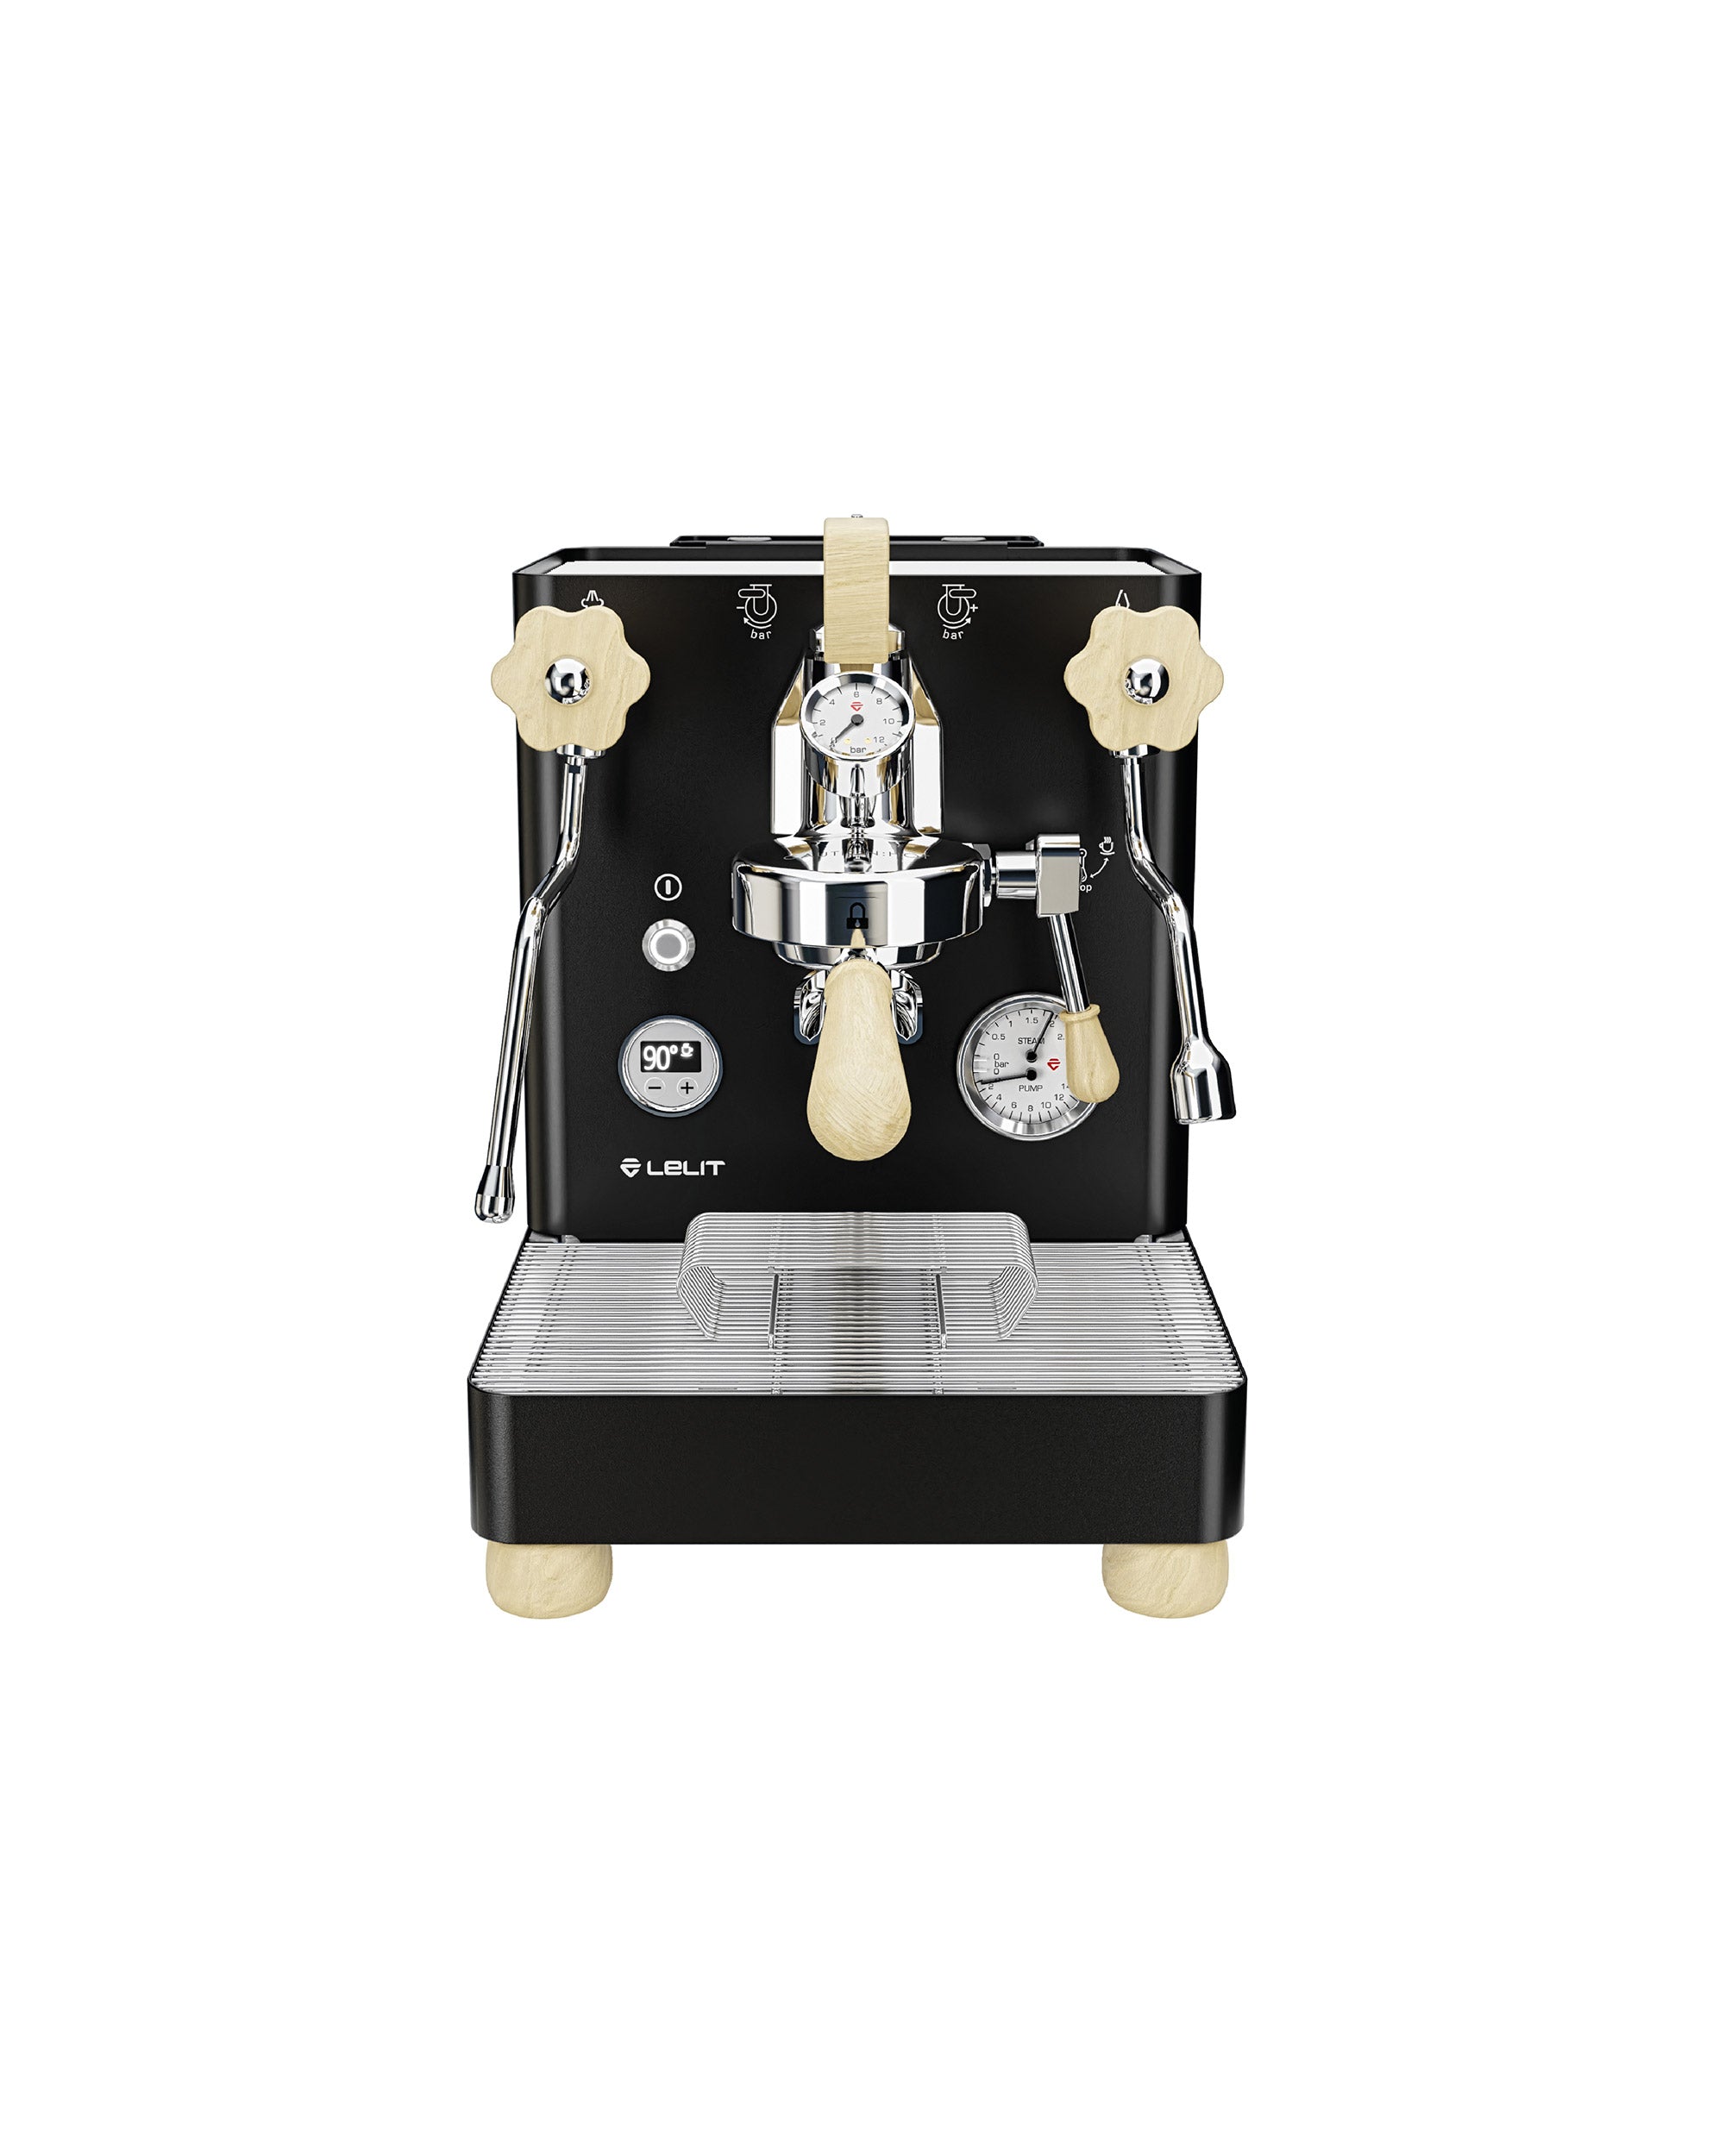 Residential manual espresso machines